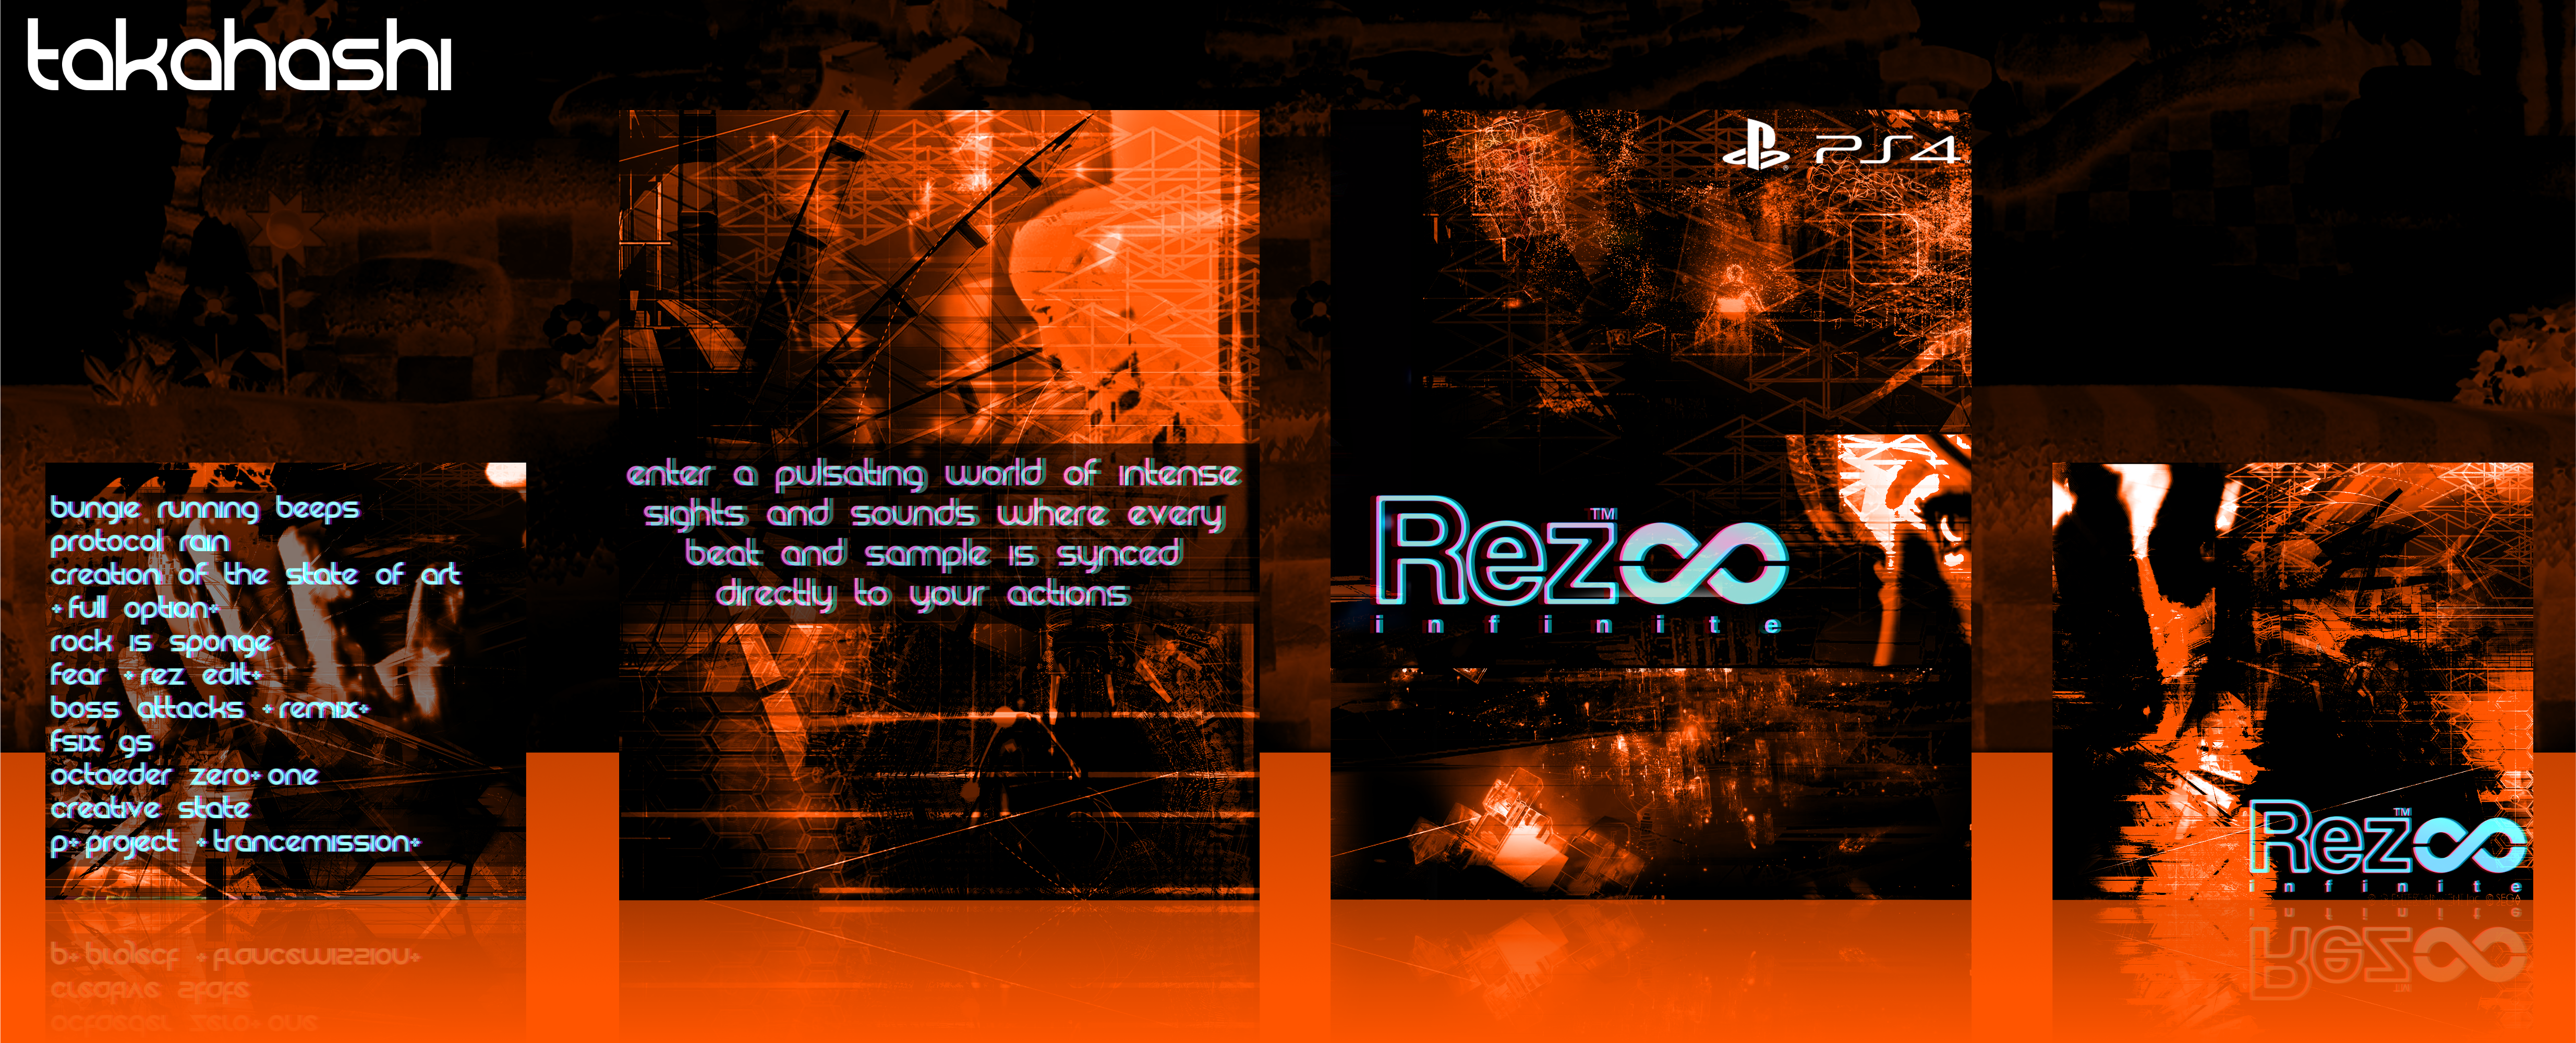 Rez Infinite box cover